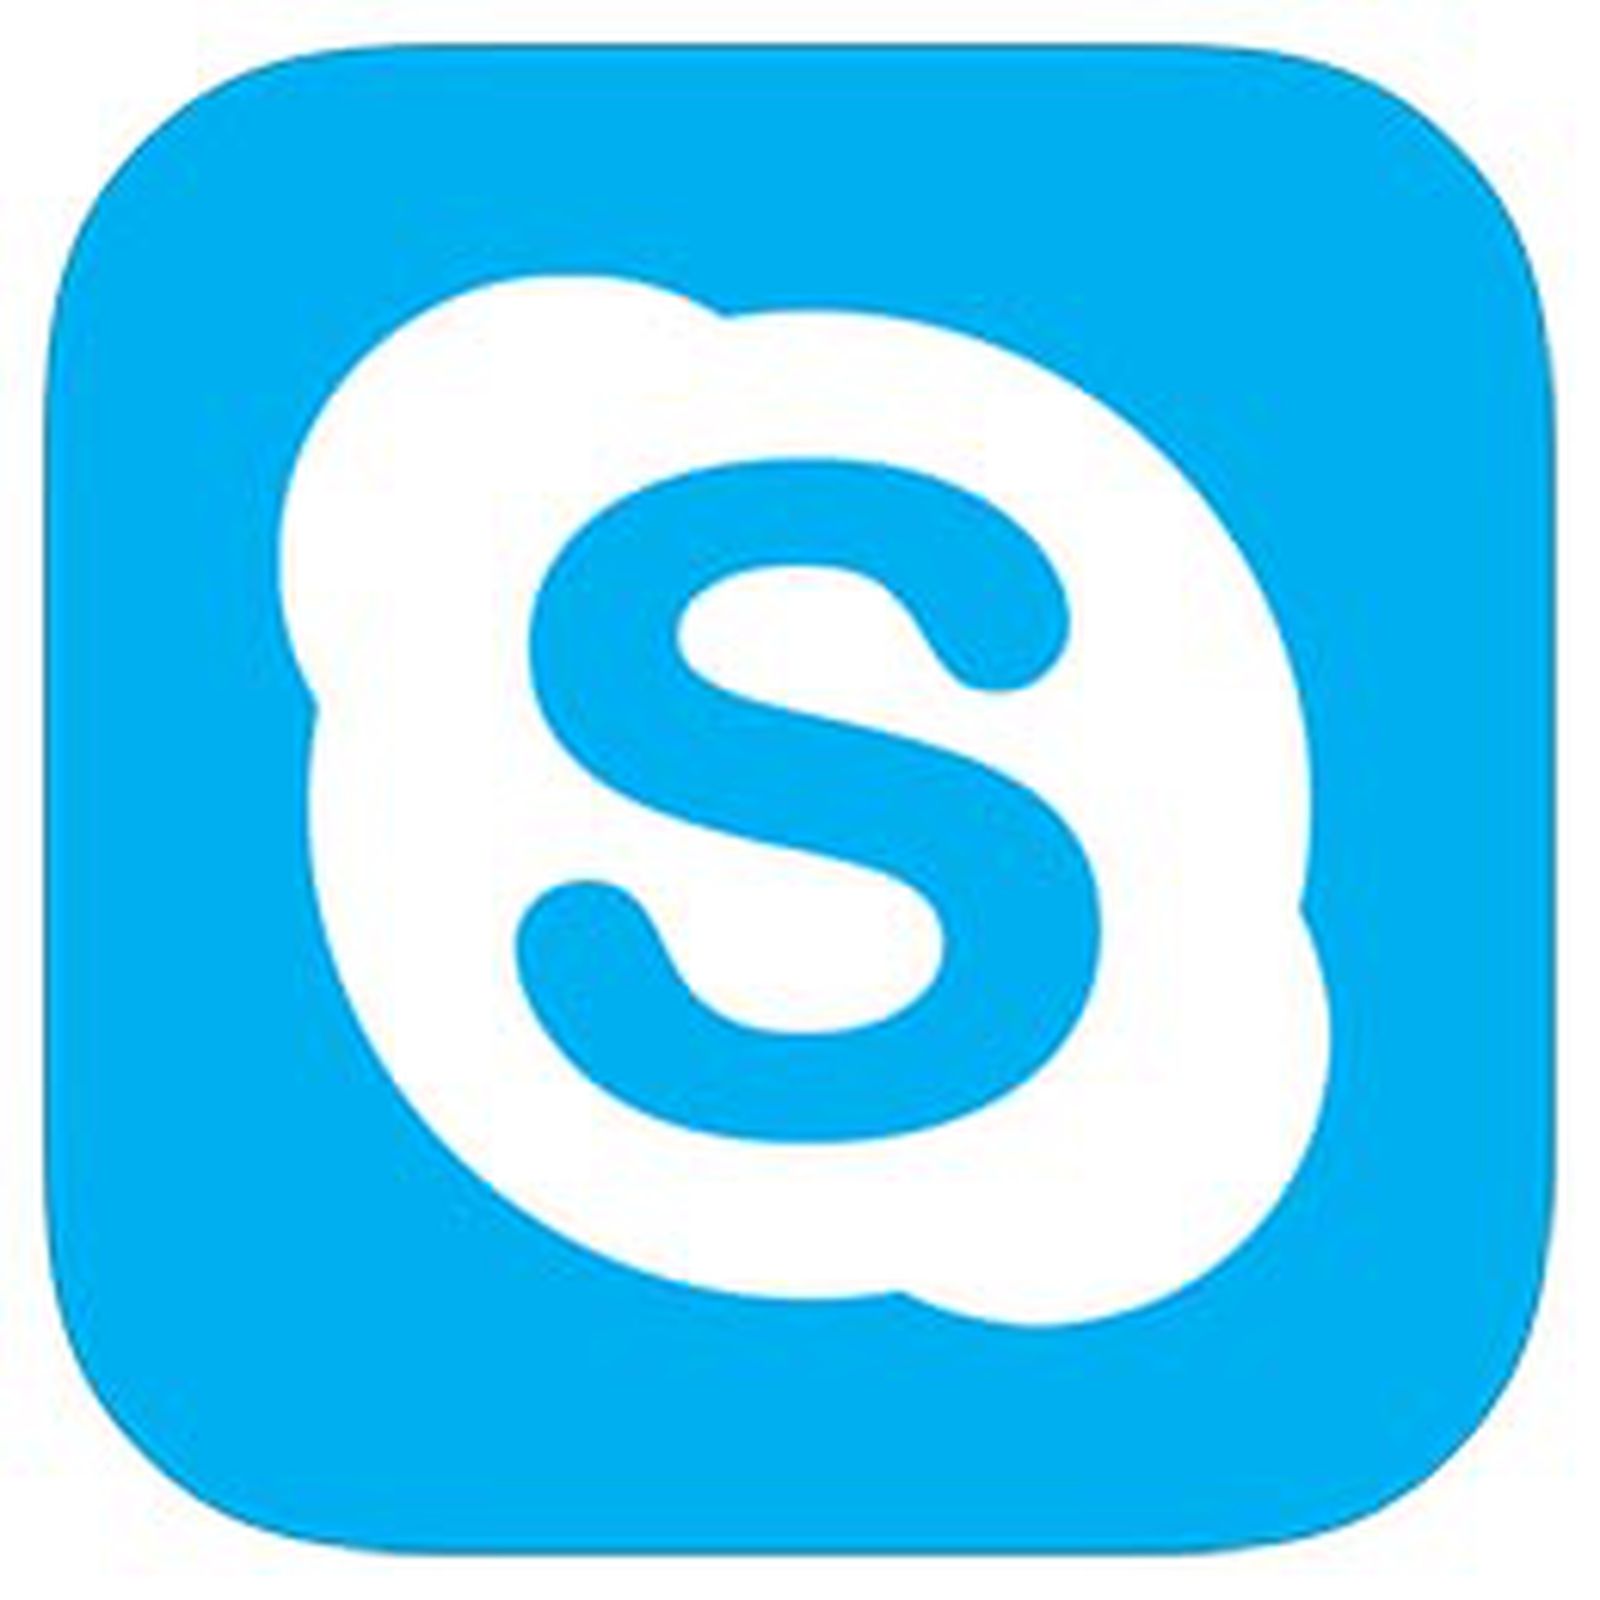 skype application for mac